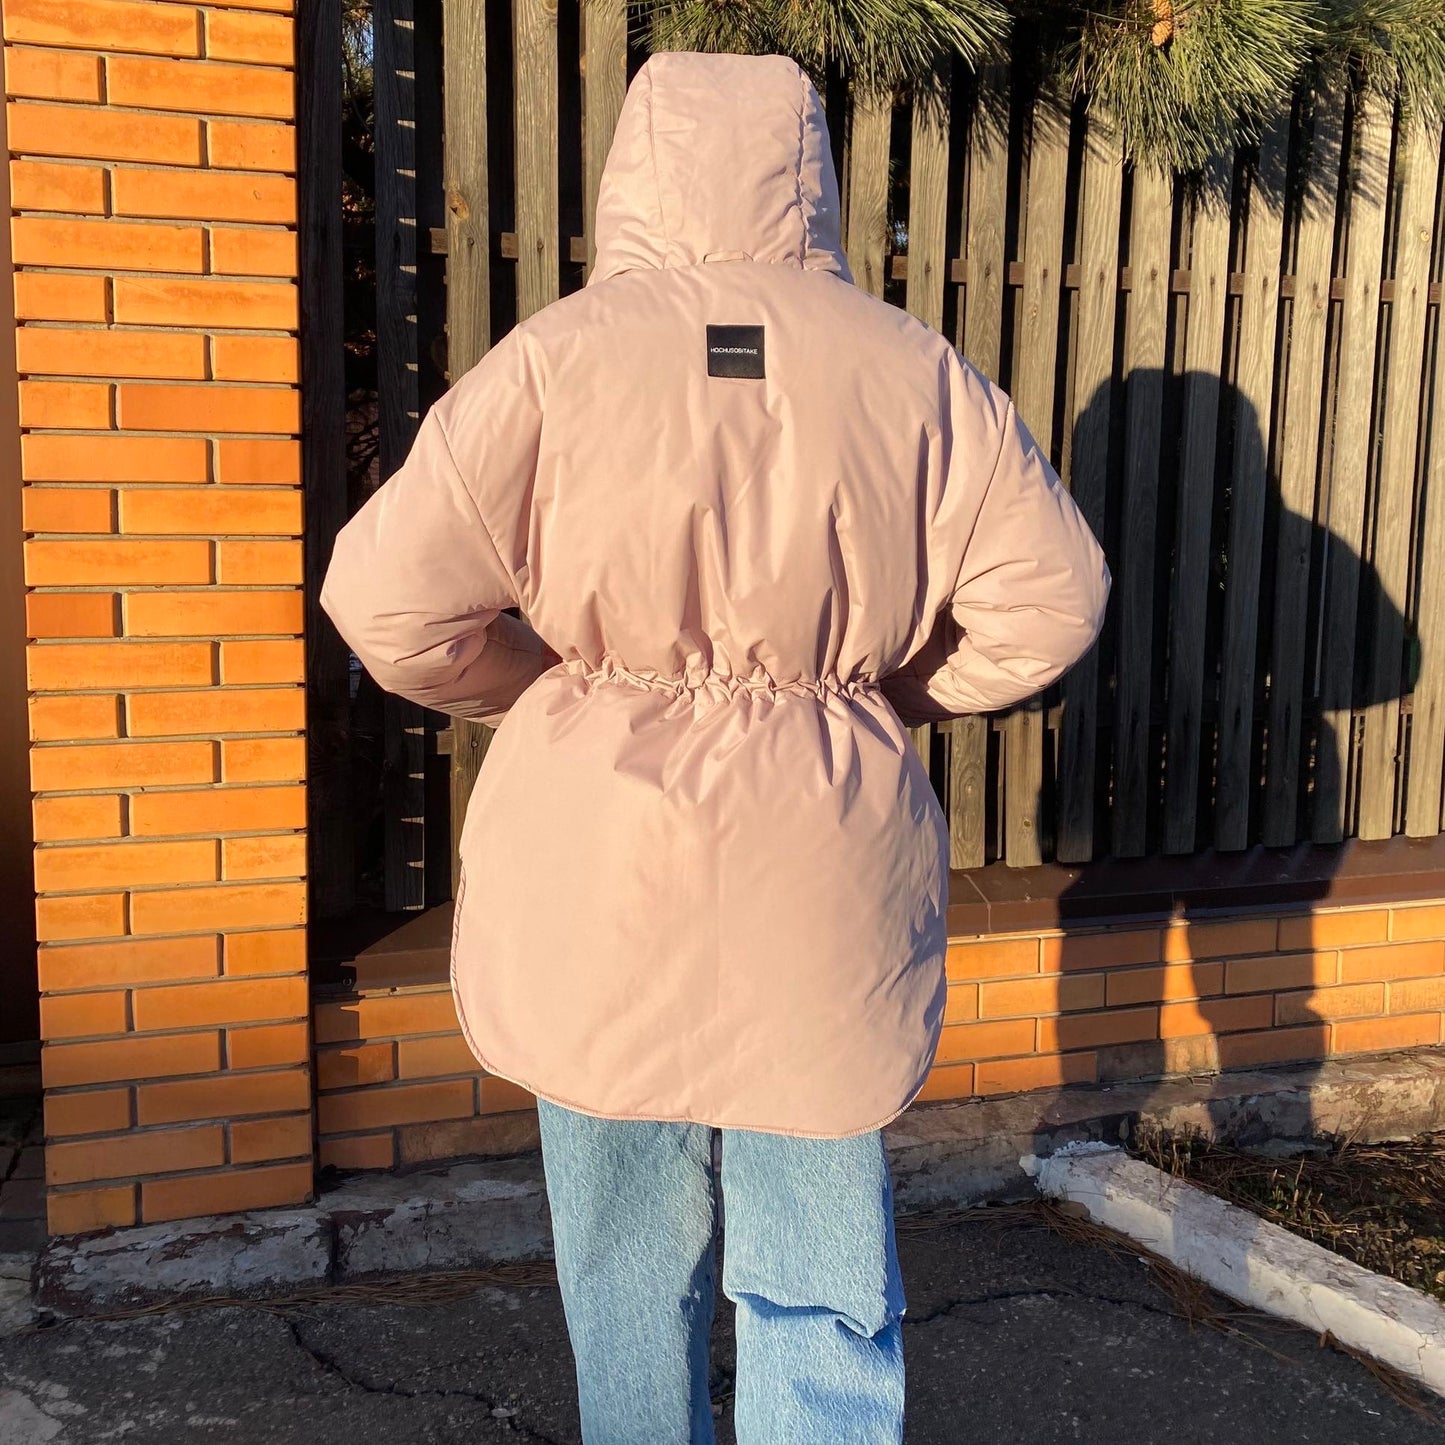 Winter double-sided jacket milk/pink